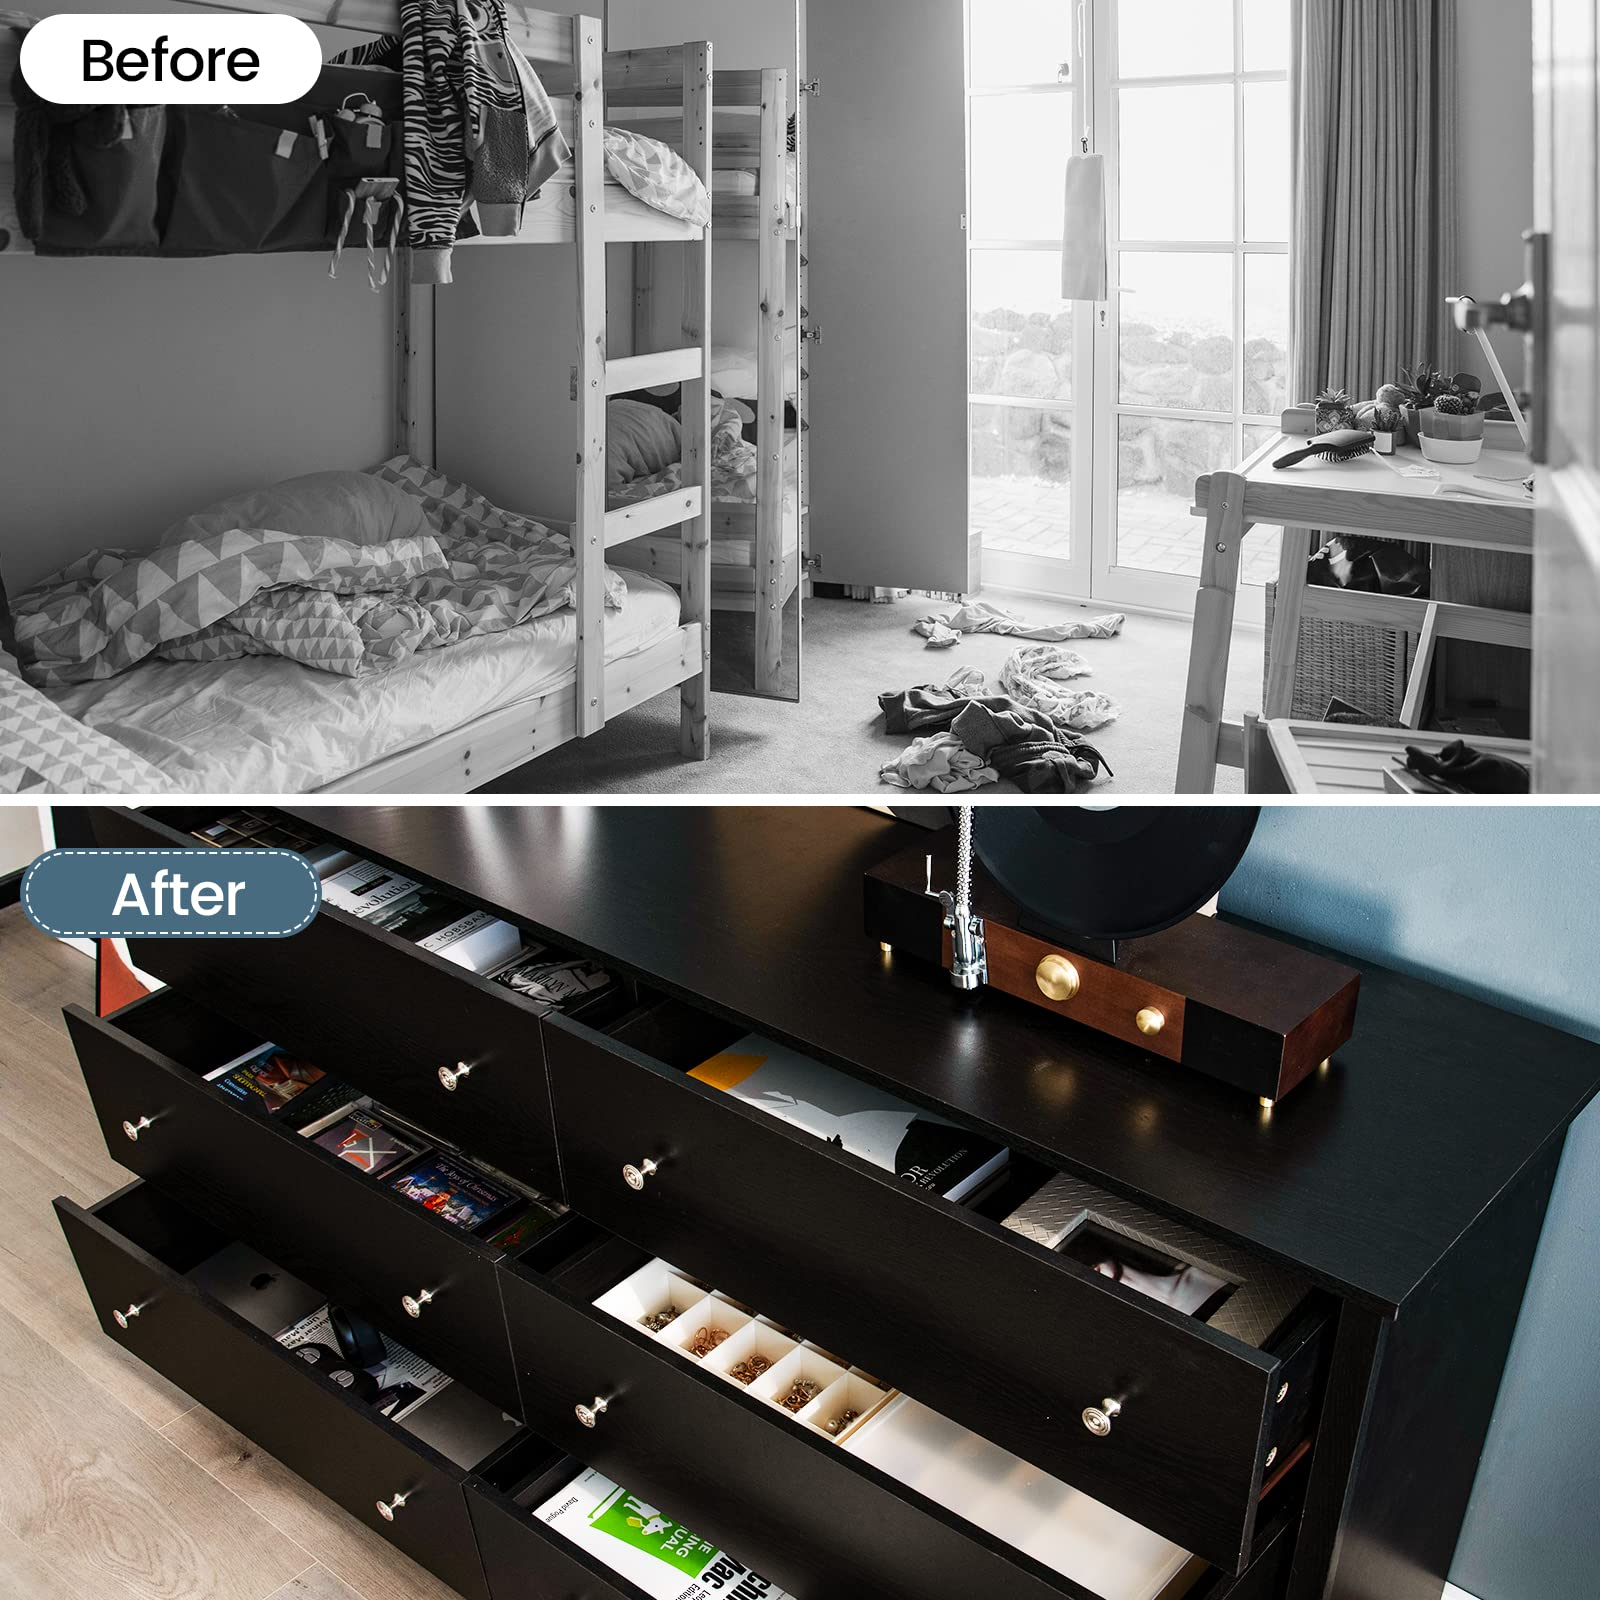 Giantex 6-Drawer Dresser for Bedroom - Freestanding Storage Cabinet